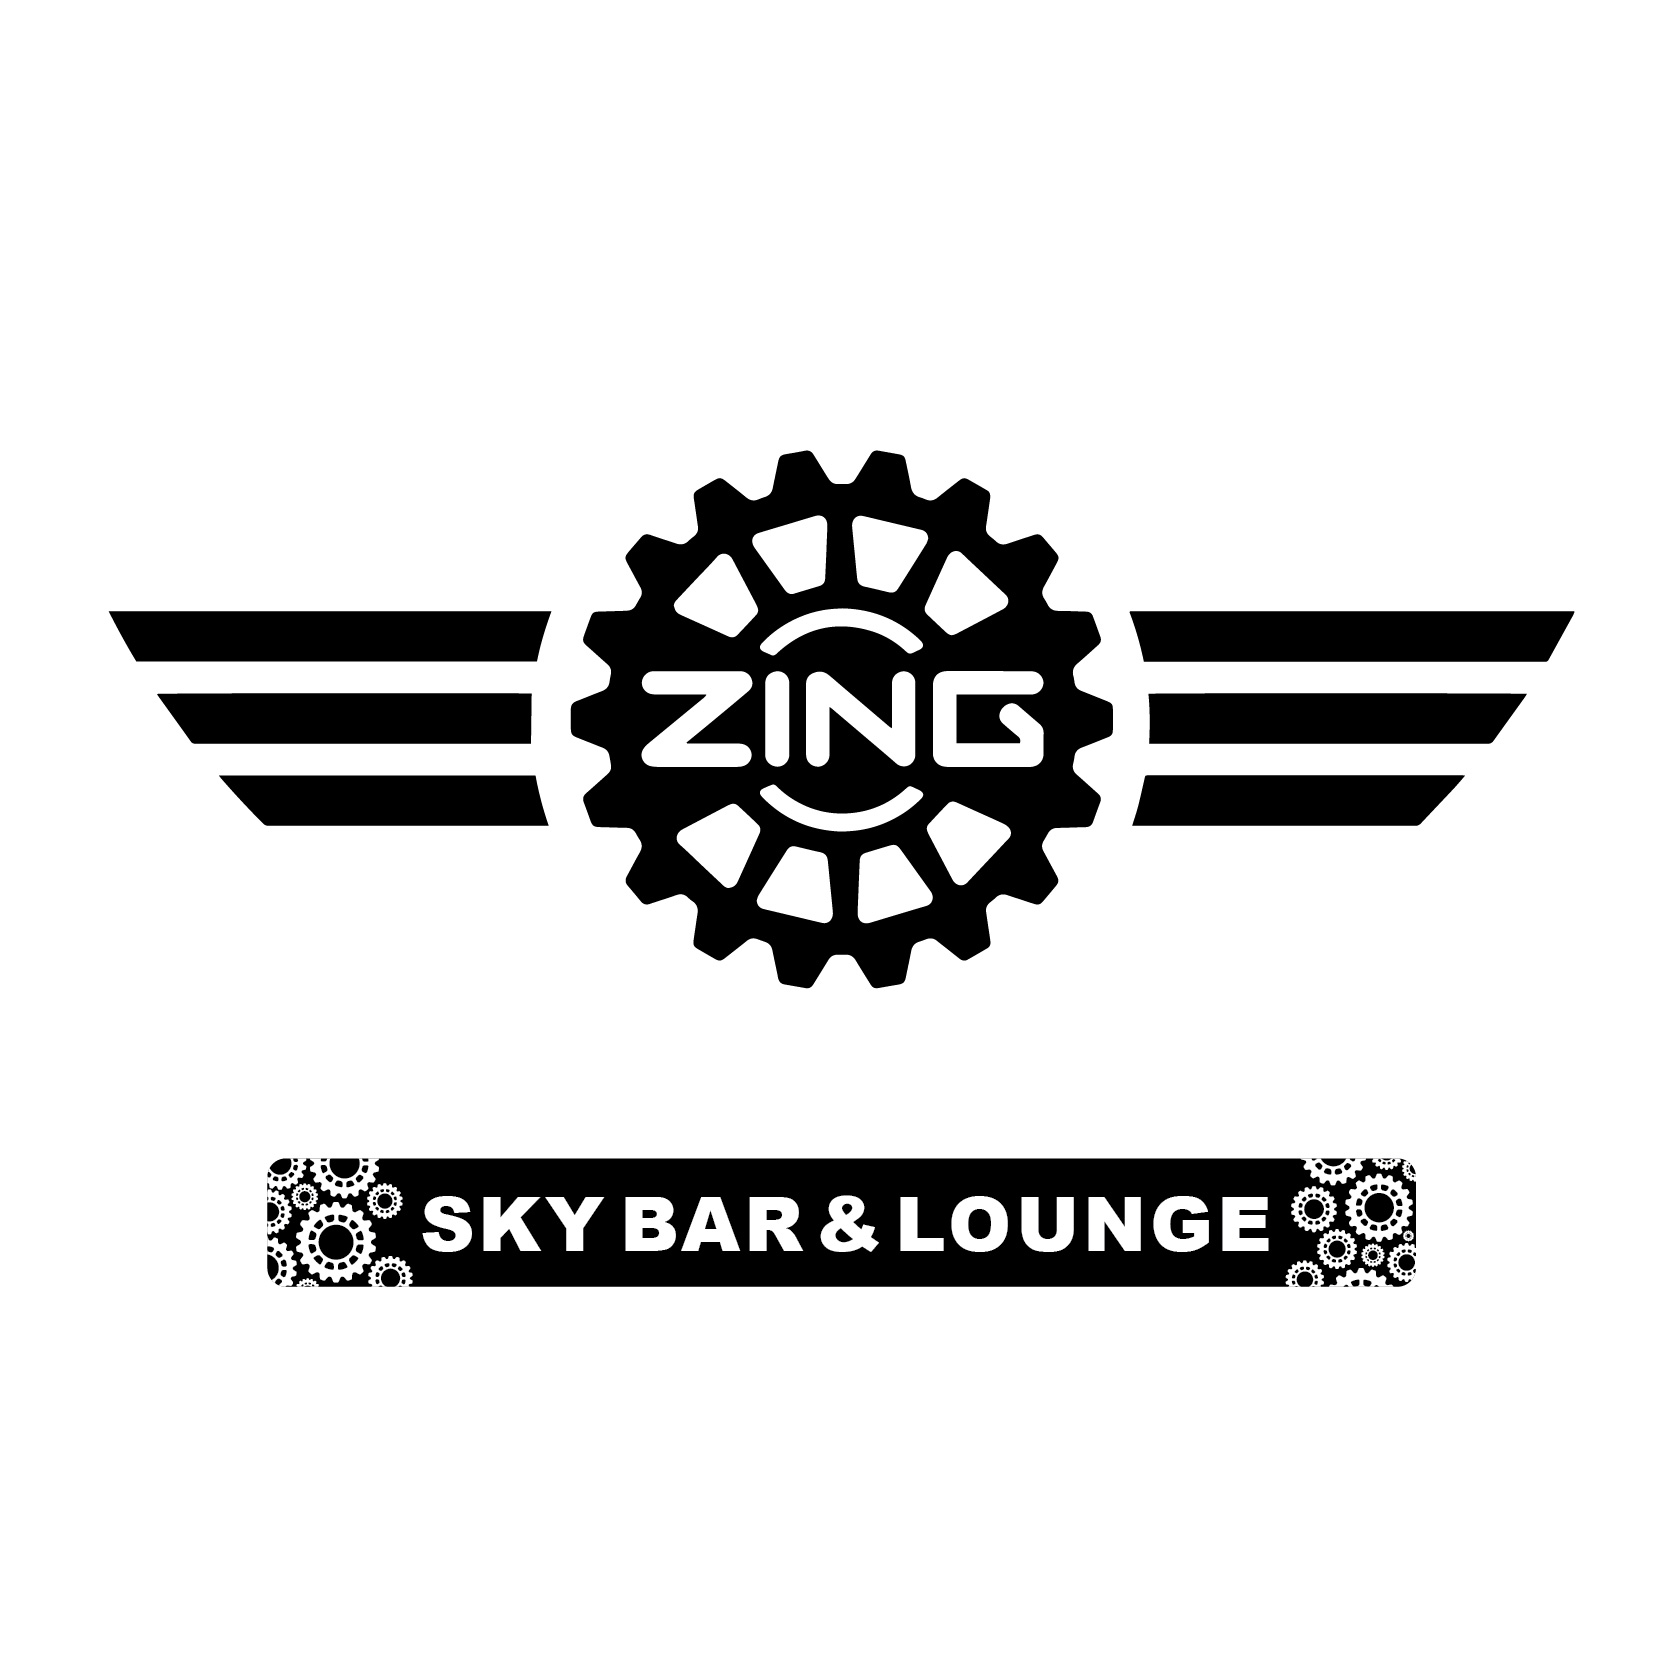 Zing-Sky Bar & Lounge